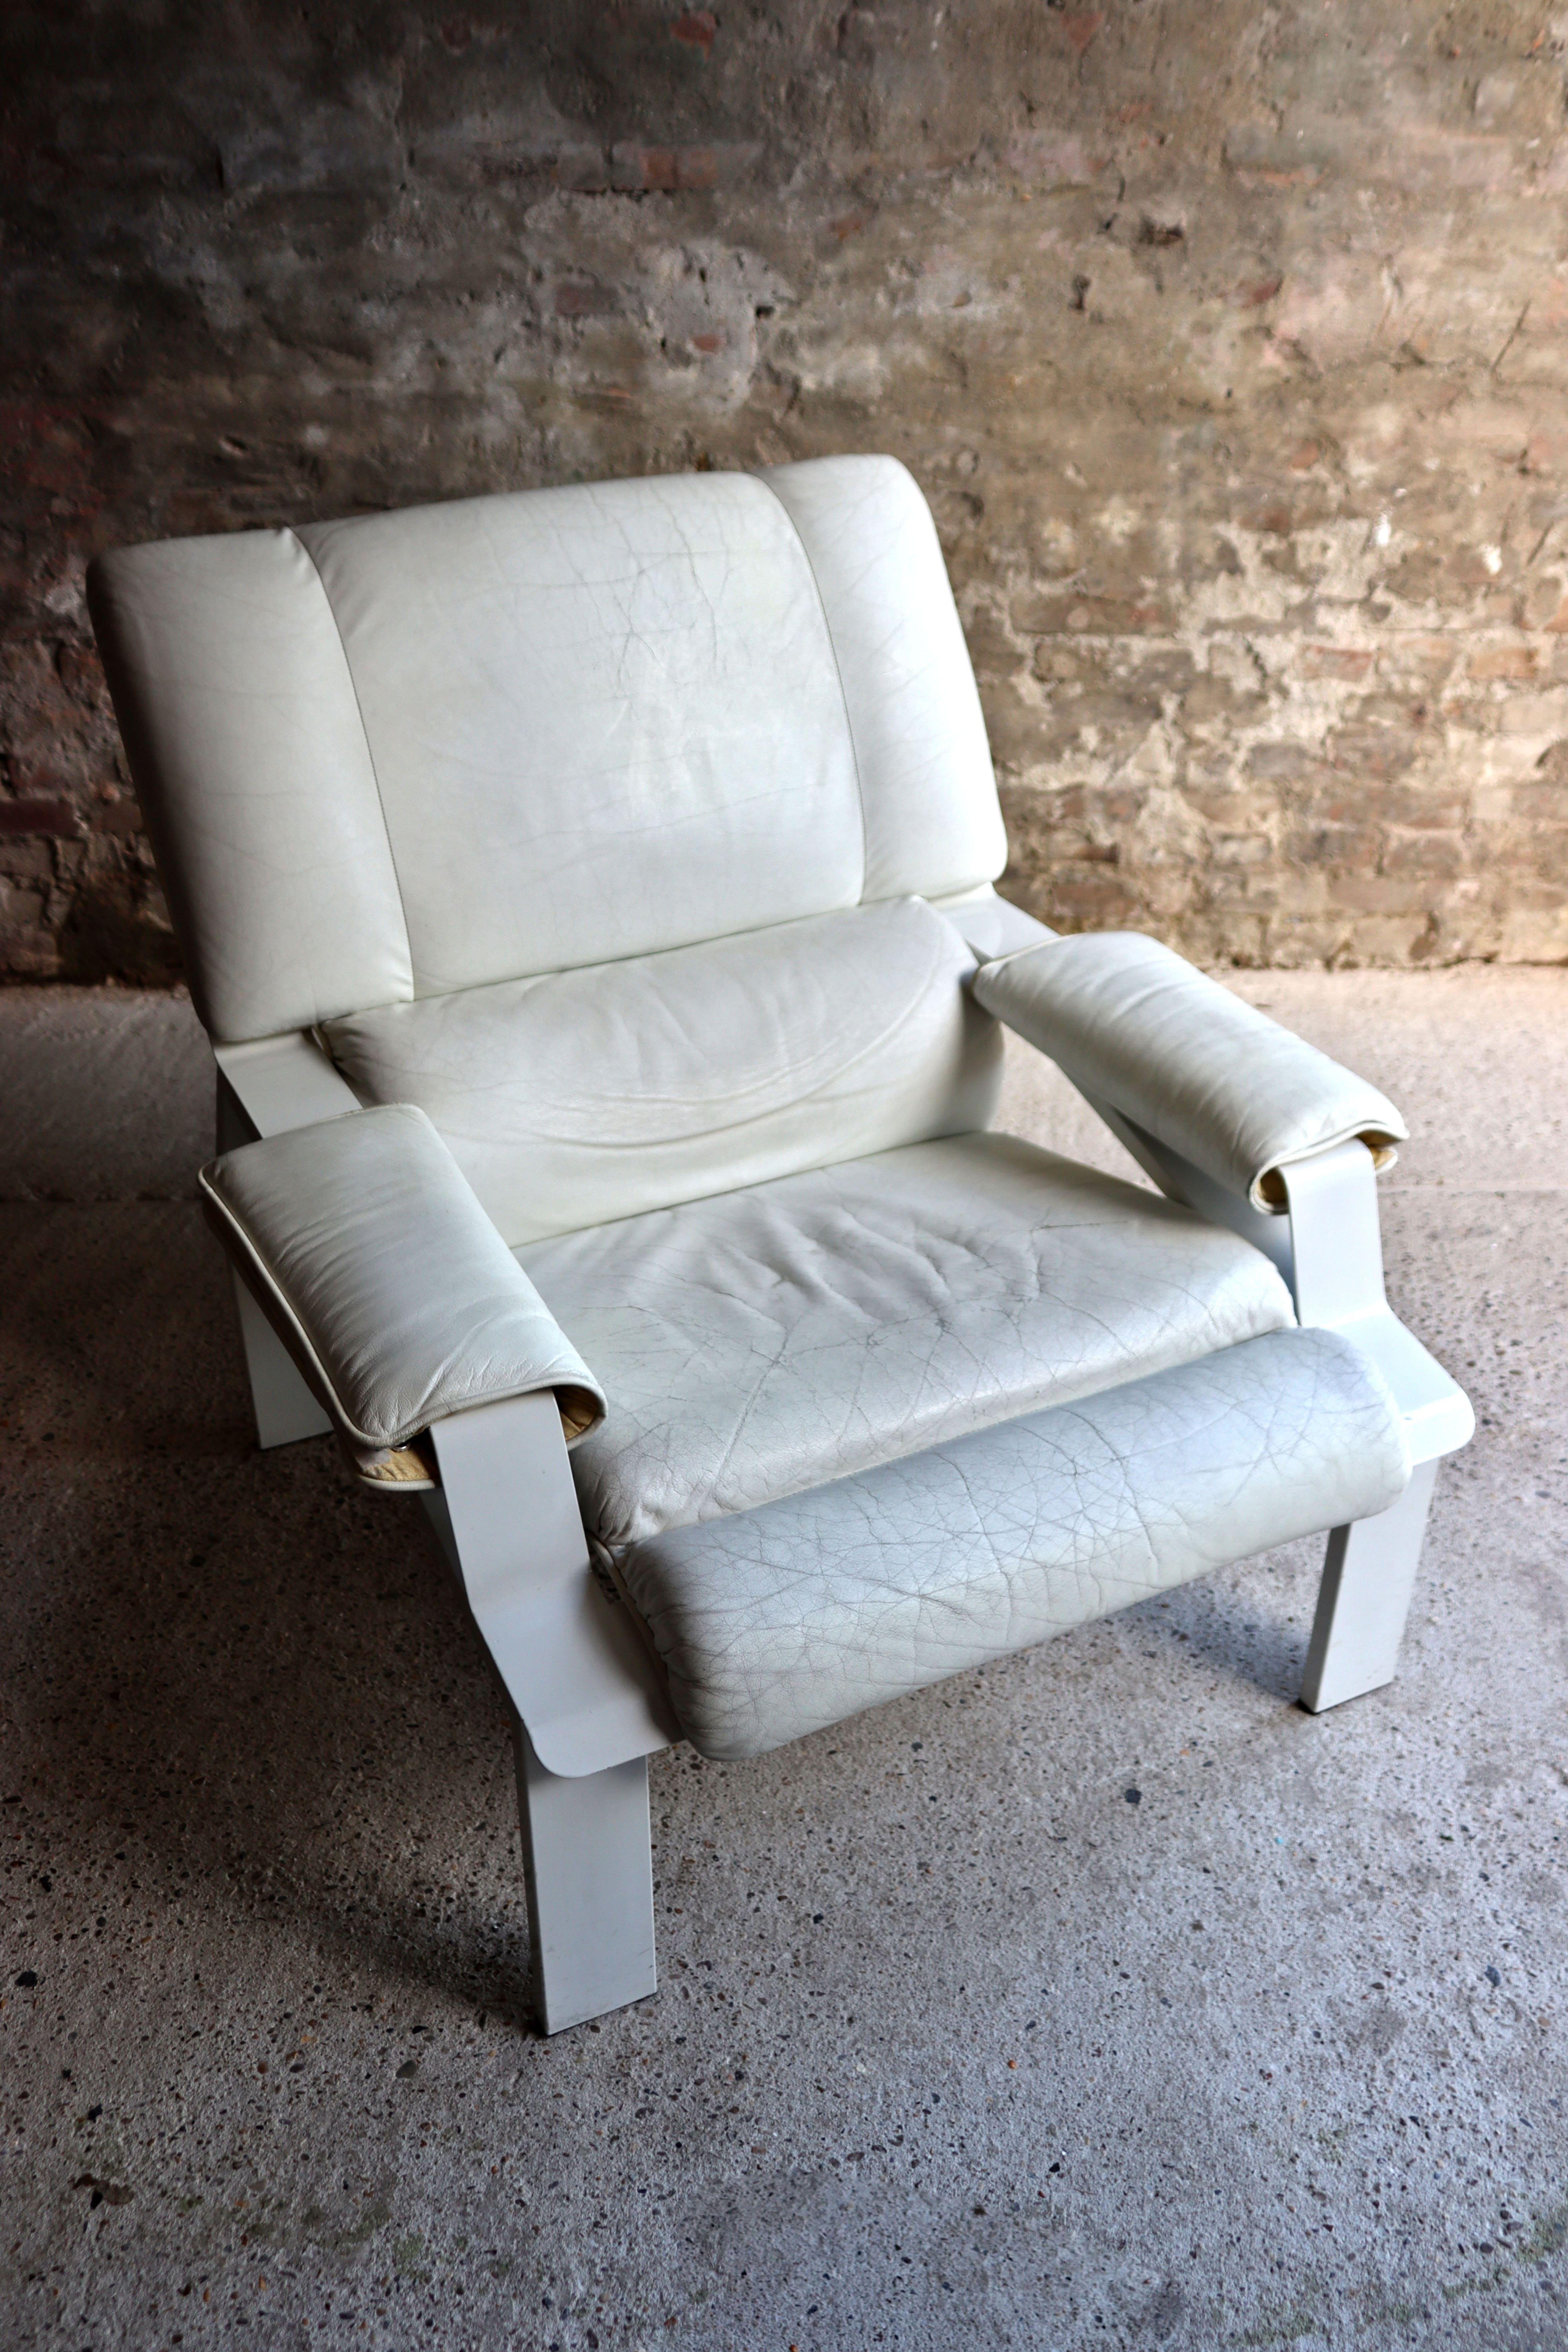 European Joe Colombo – LEM chair – White Leather – Bieffeplast – Italy – 1960s For Sale